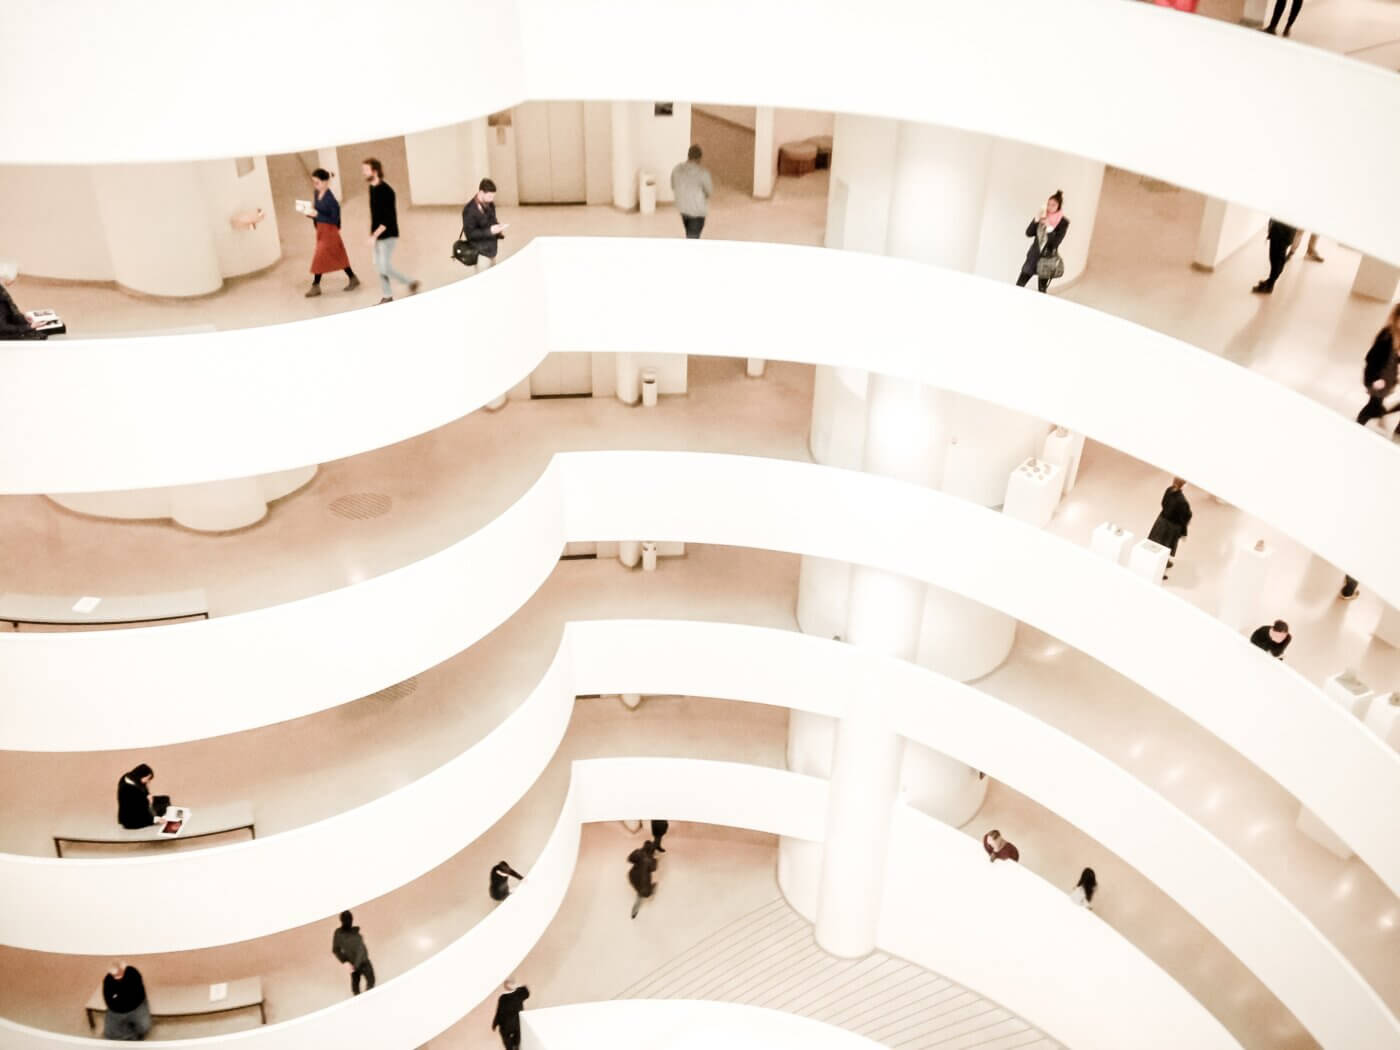 Guggenheim Museum NYC, Welcome to New York